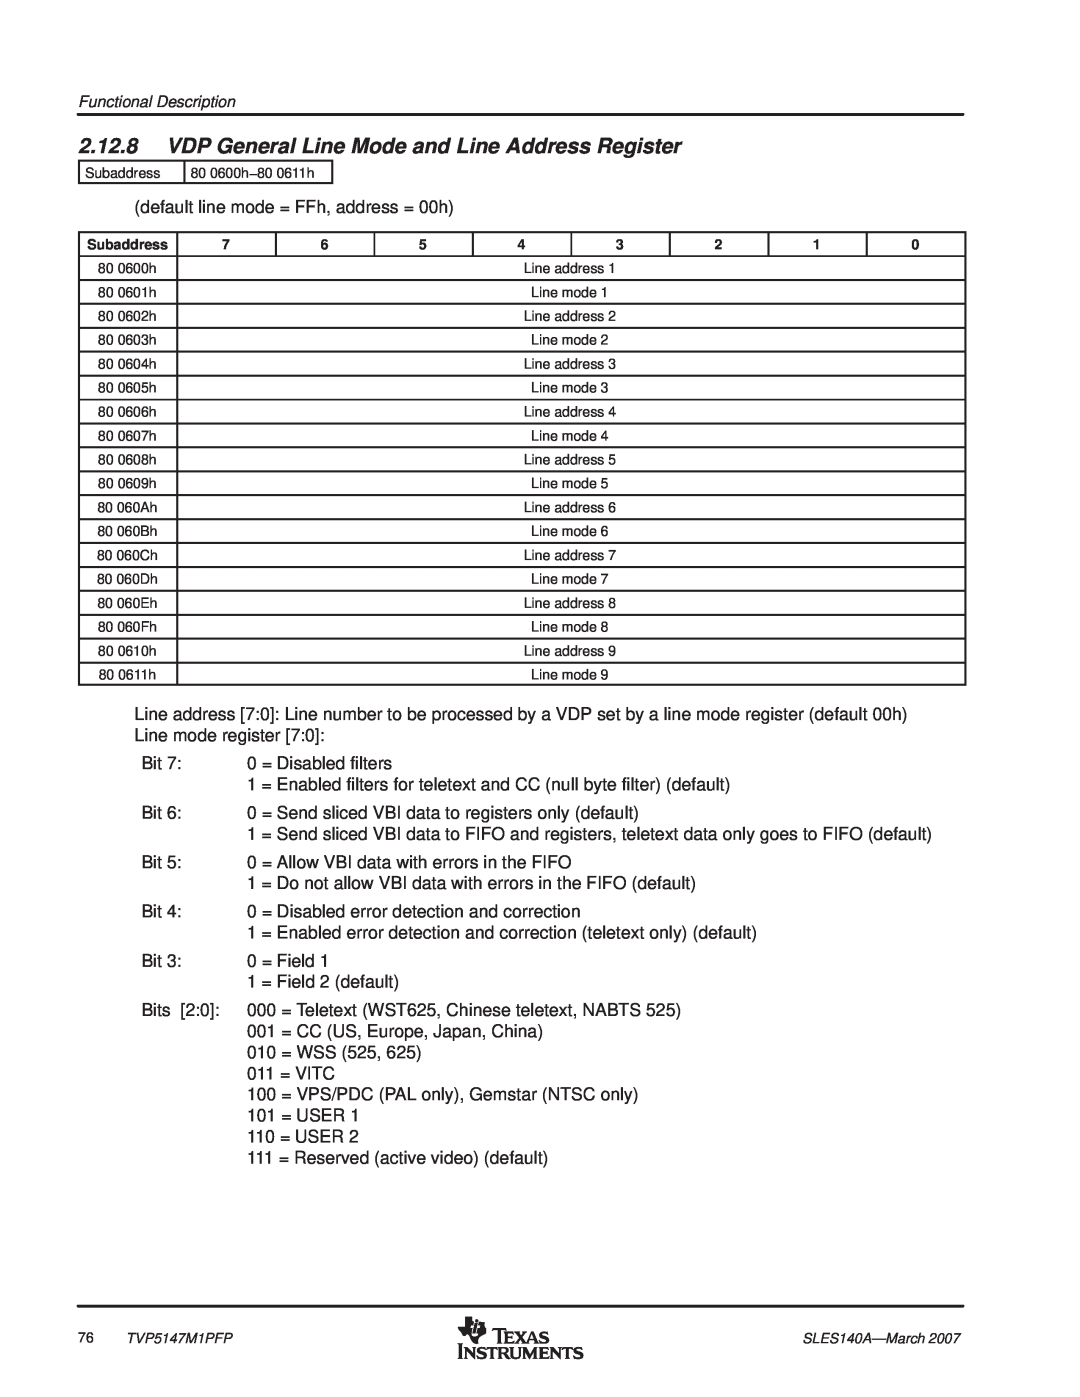 Texas Instruments TVP5147M1PFP manual VDP General Line Mode and Line Address Register 